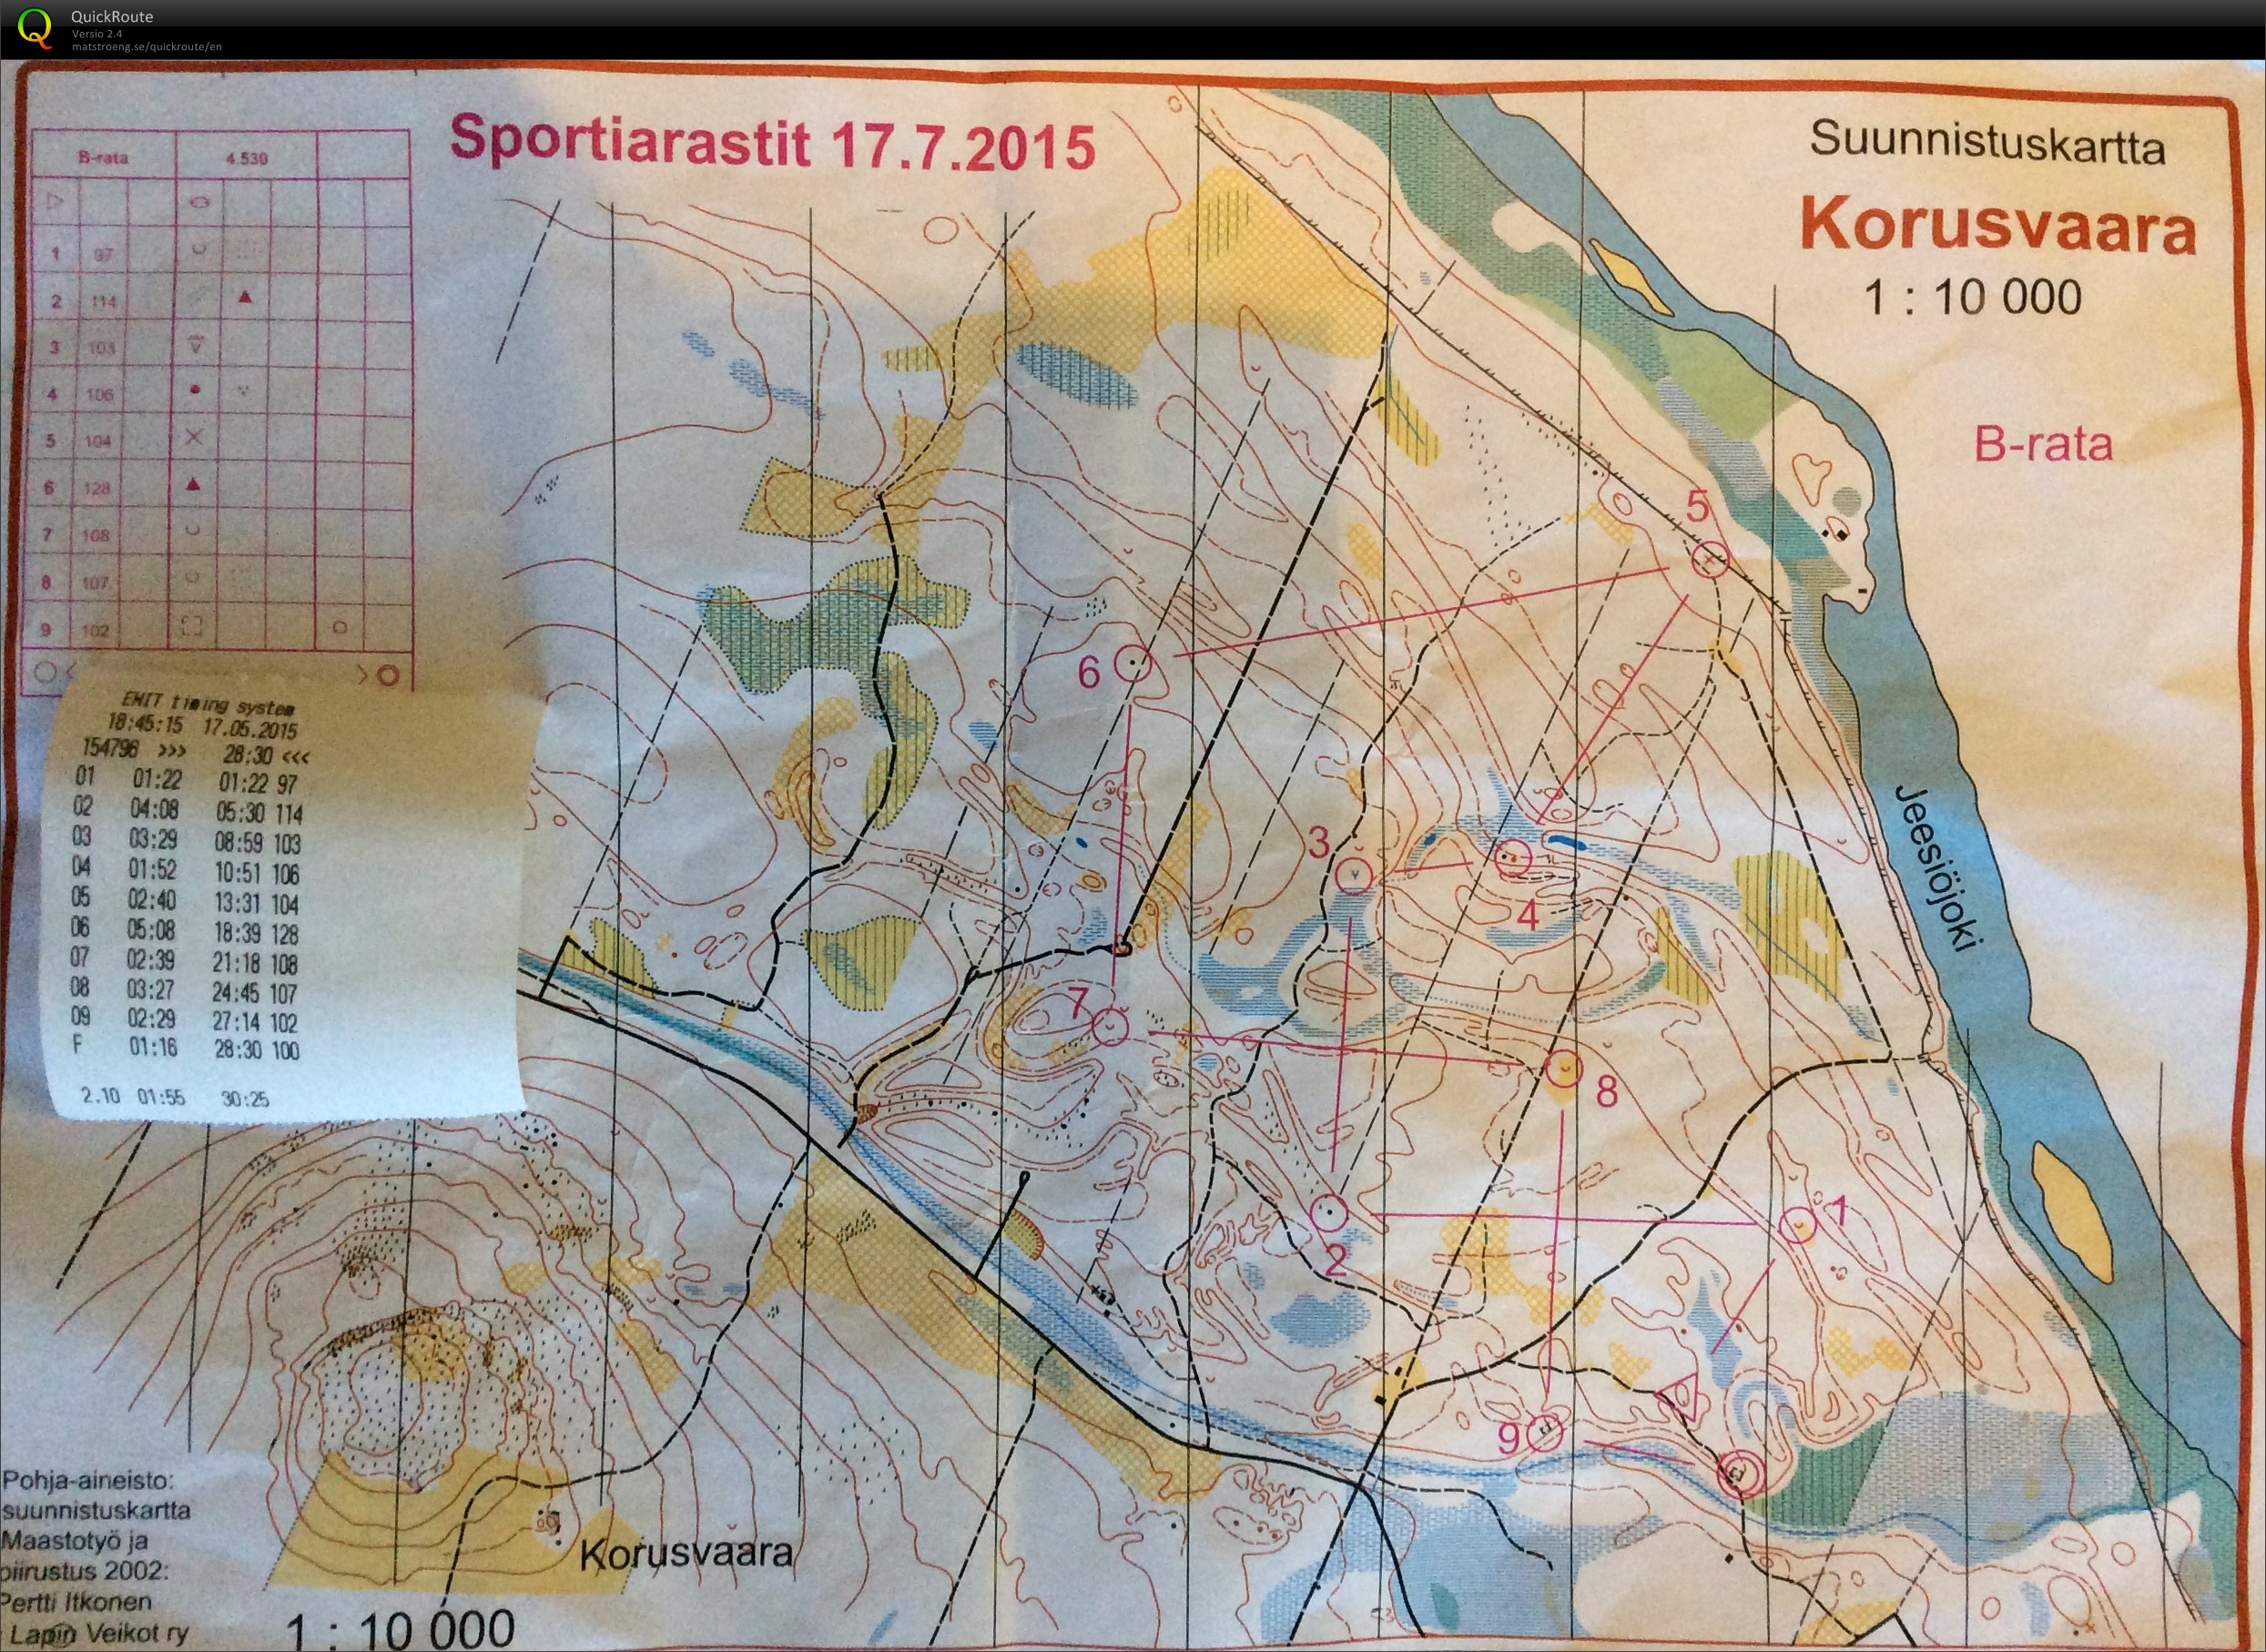 Sportia-rastit (2015-06-17)